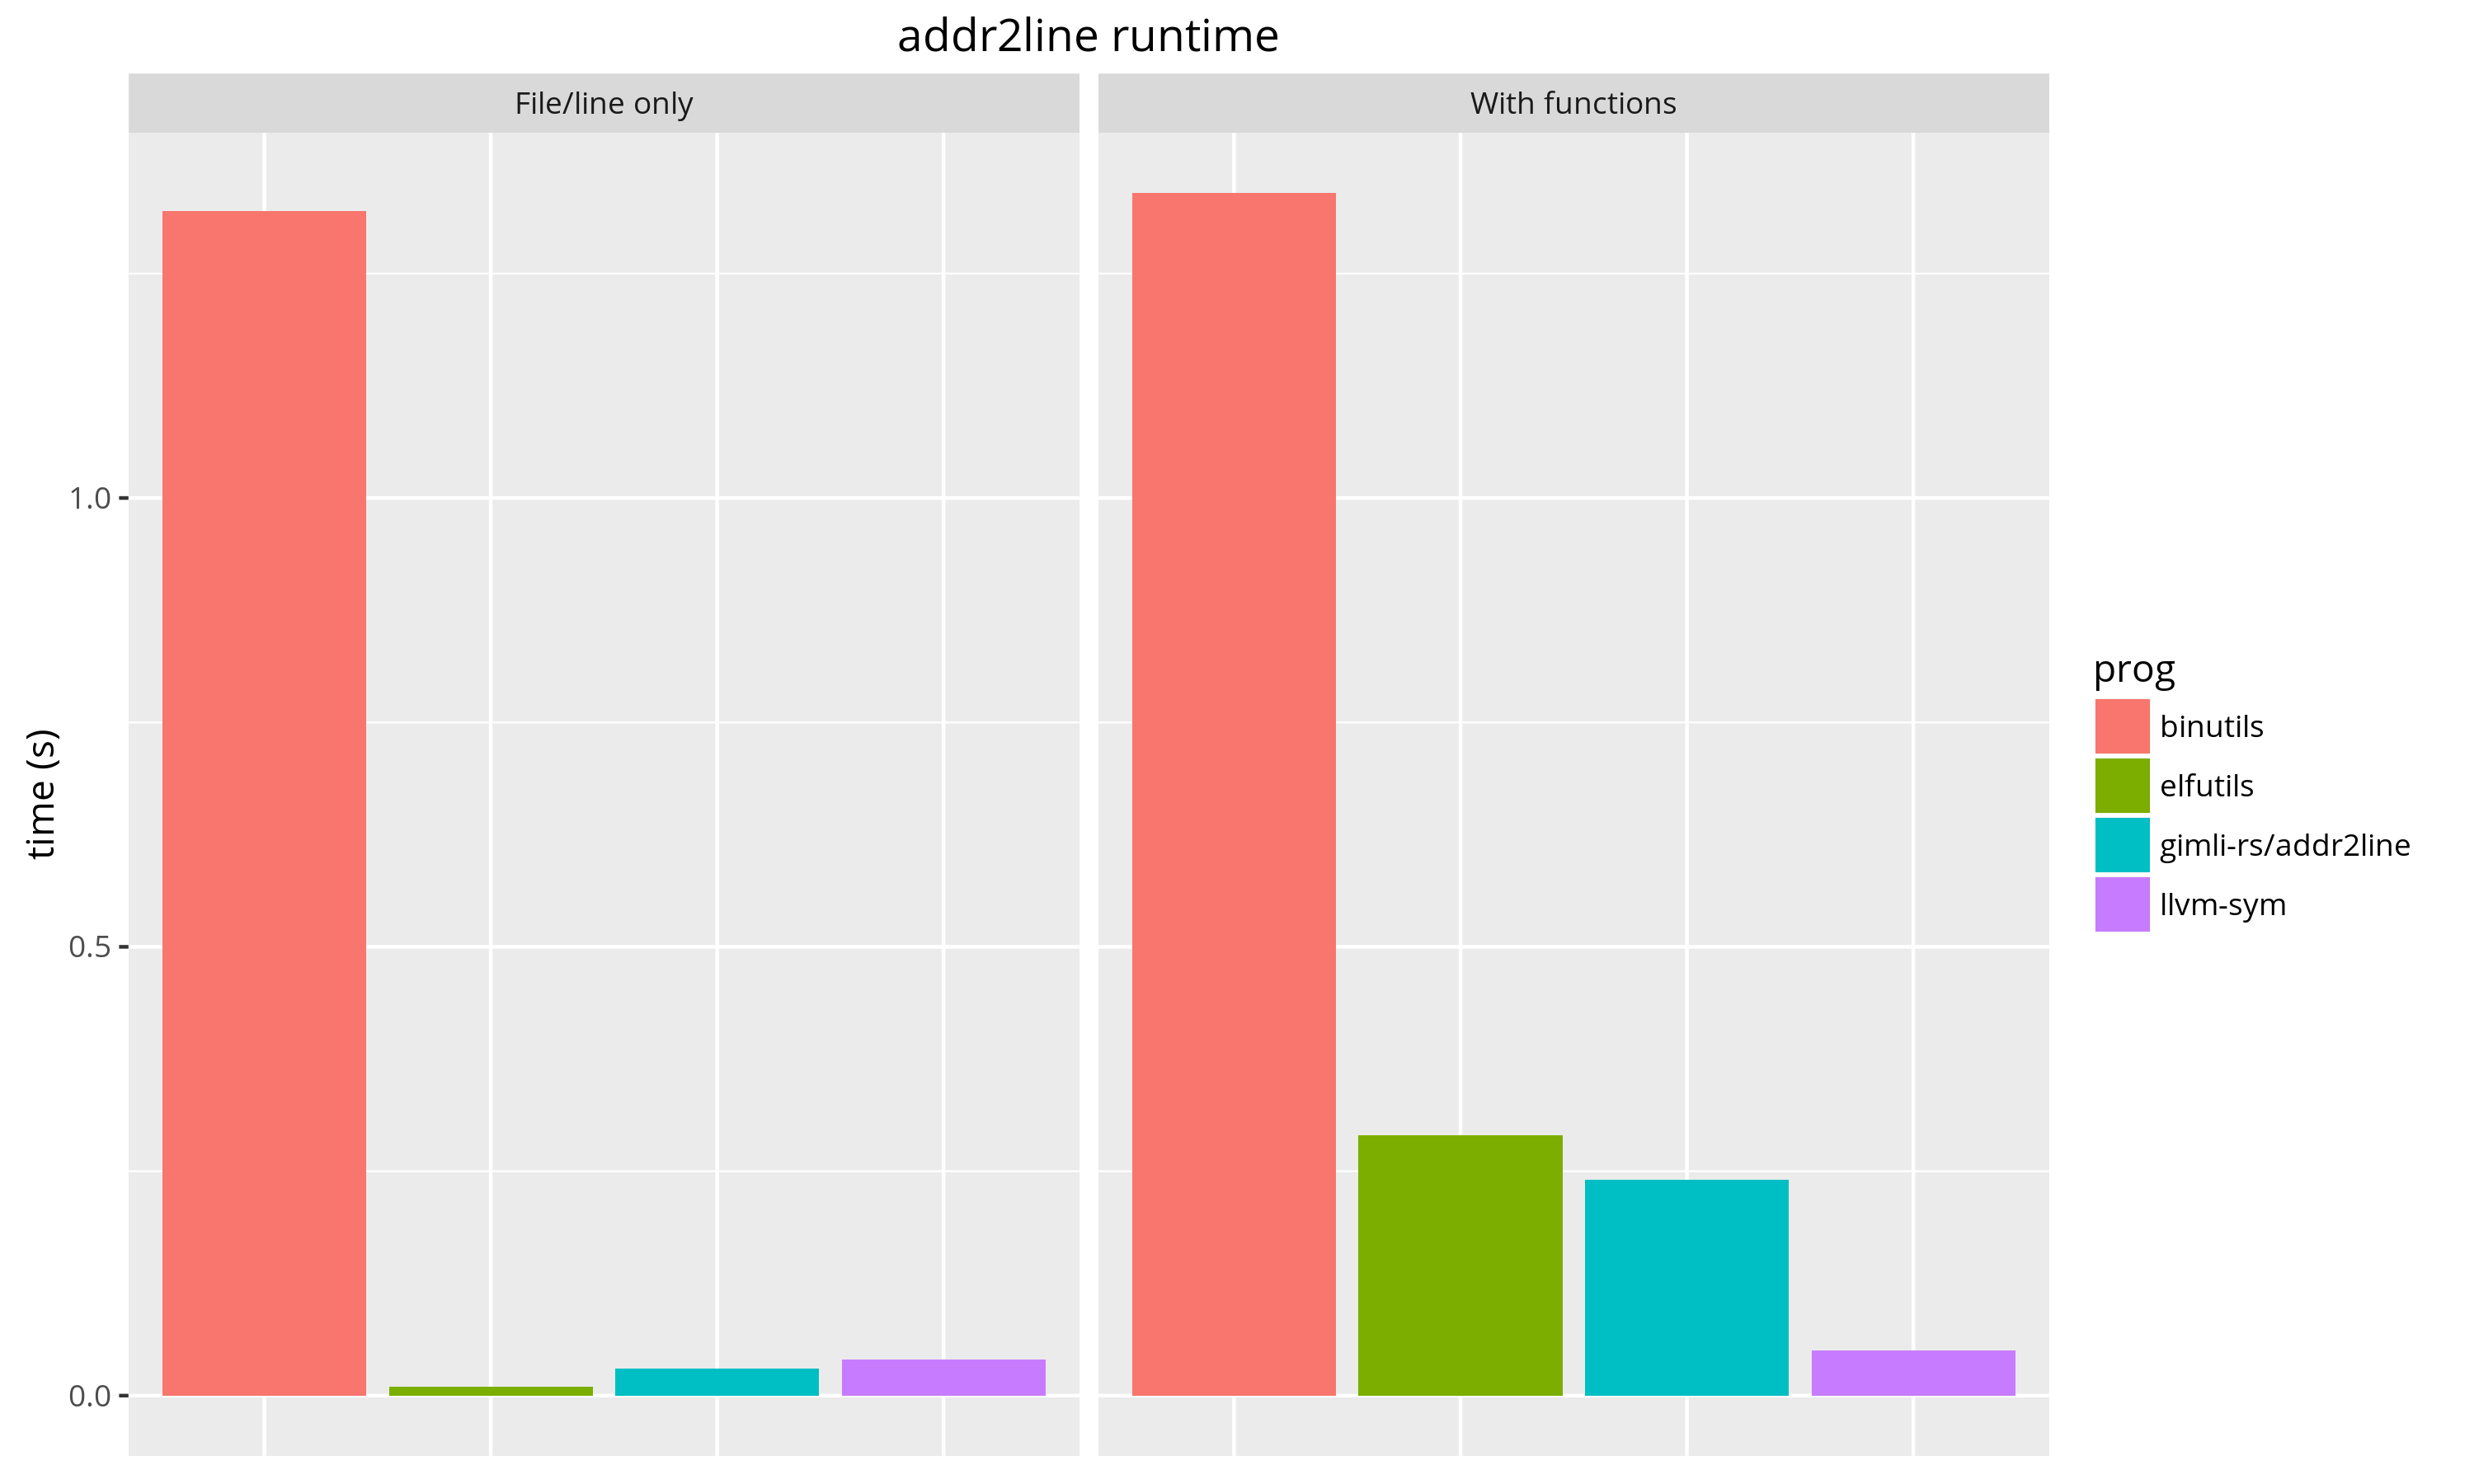 addr2line runtime